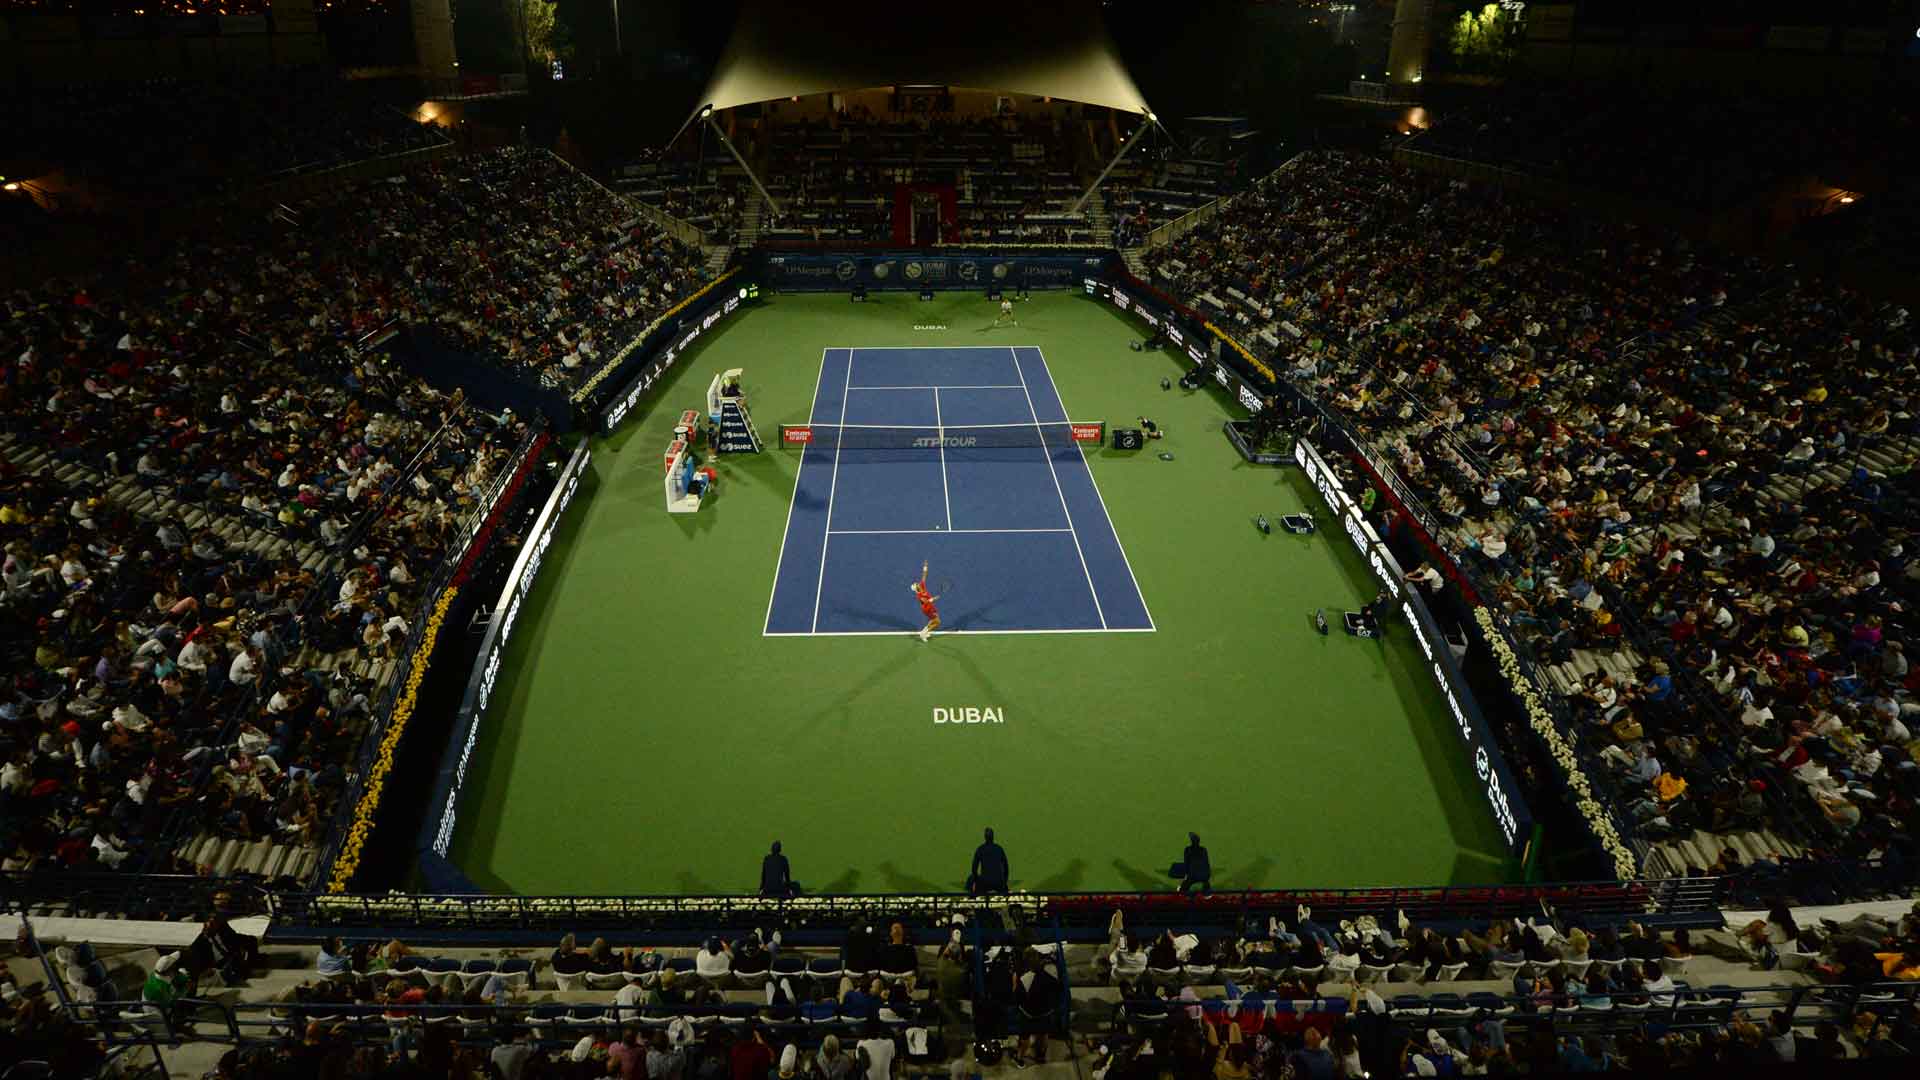 Dubai Tennis Championships 2023 prize money breakdown: How much